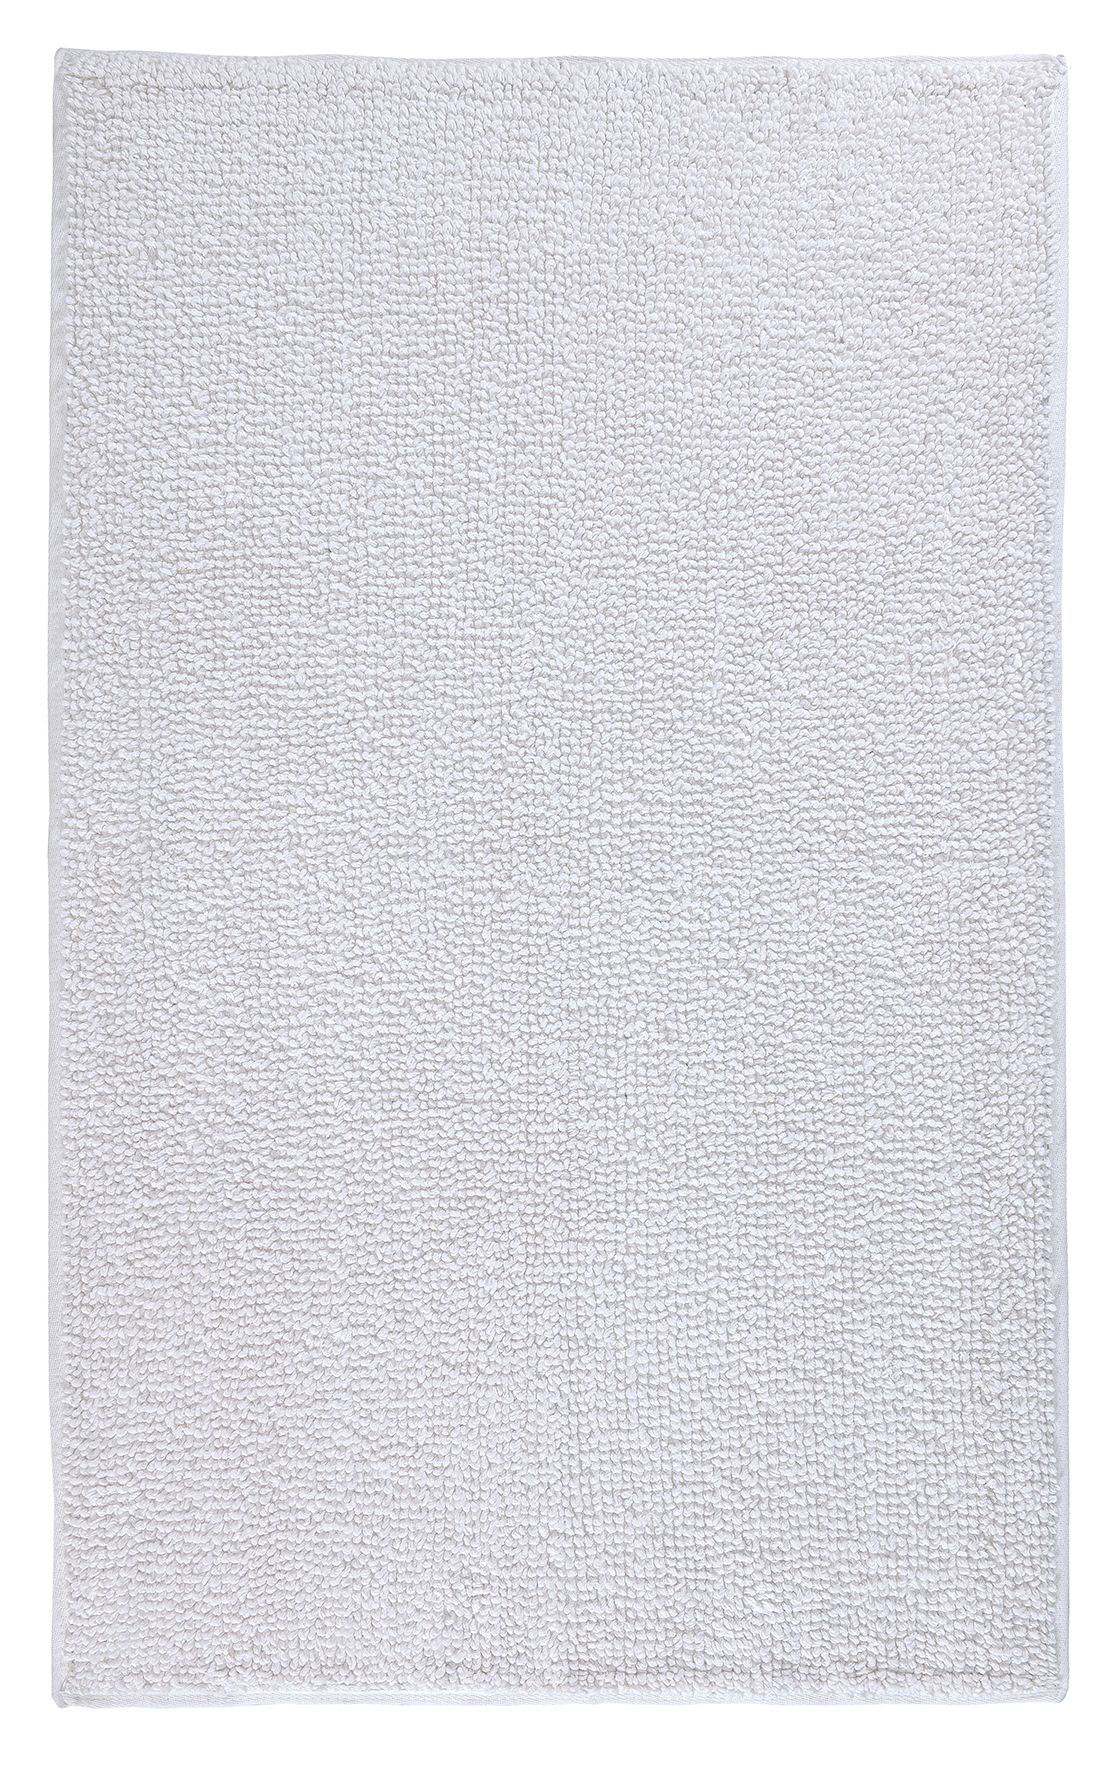 Badteppich, Chrissy Weiß, 60x100  cm